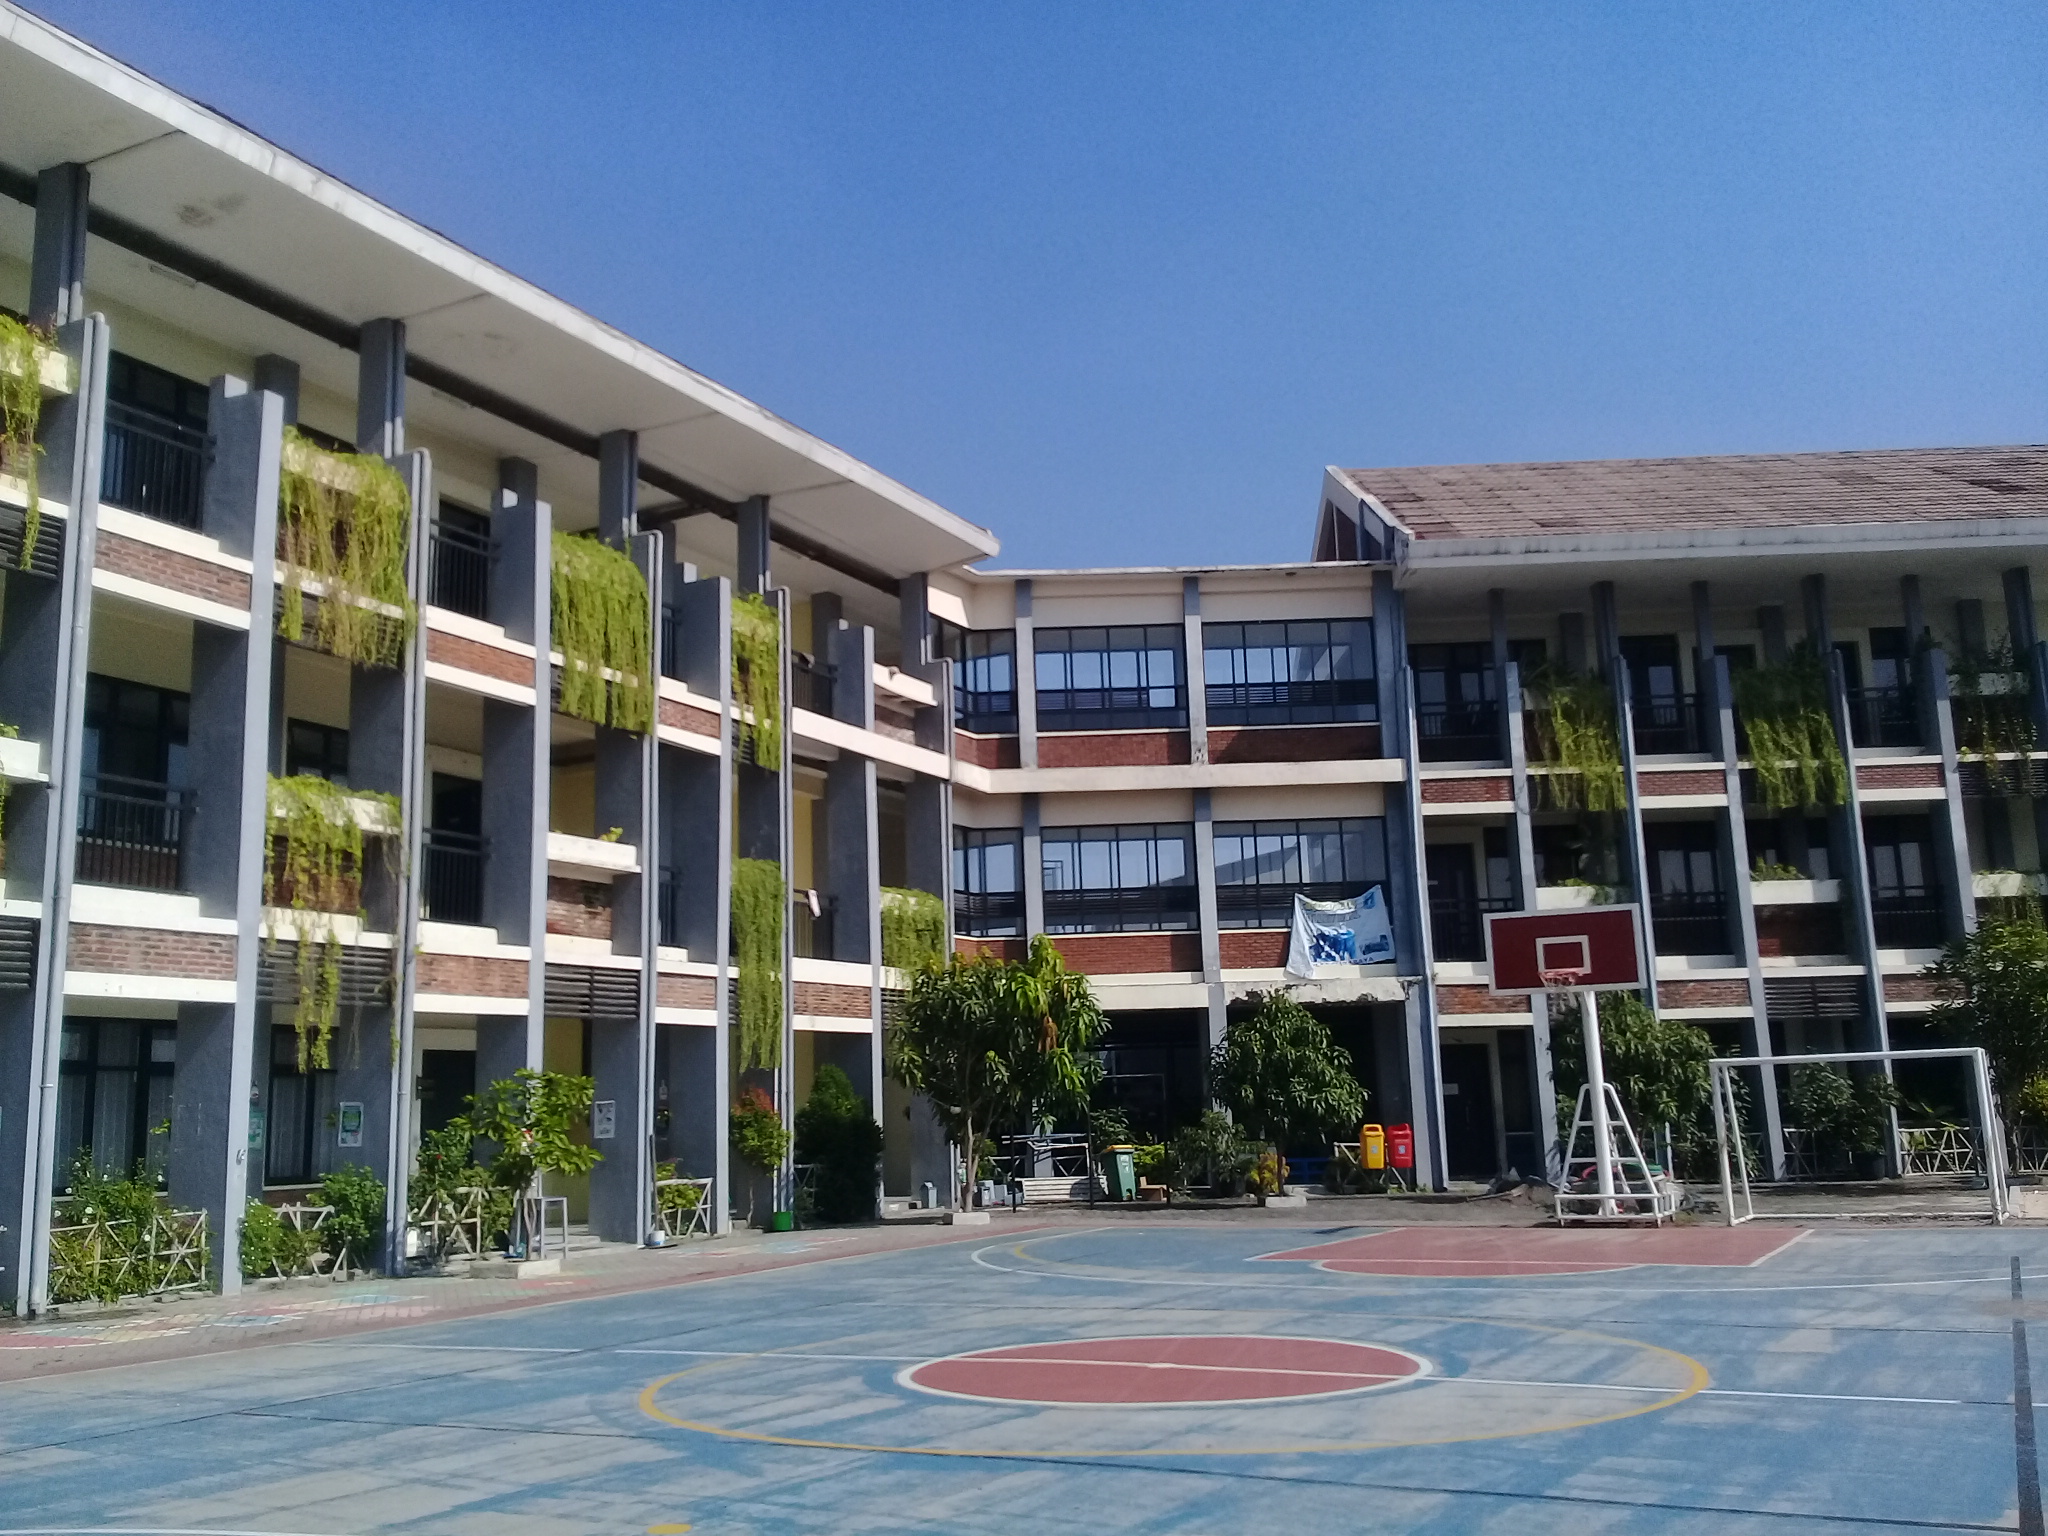 Foto SMP  Negeri 61, Kota Surabaya